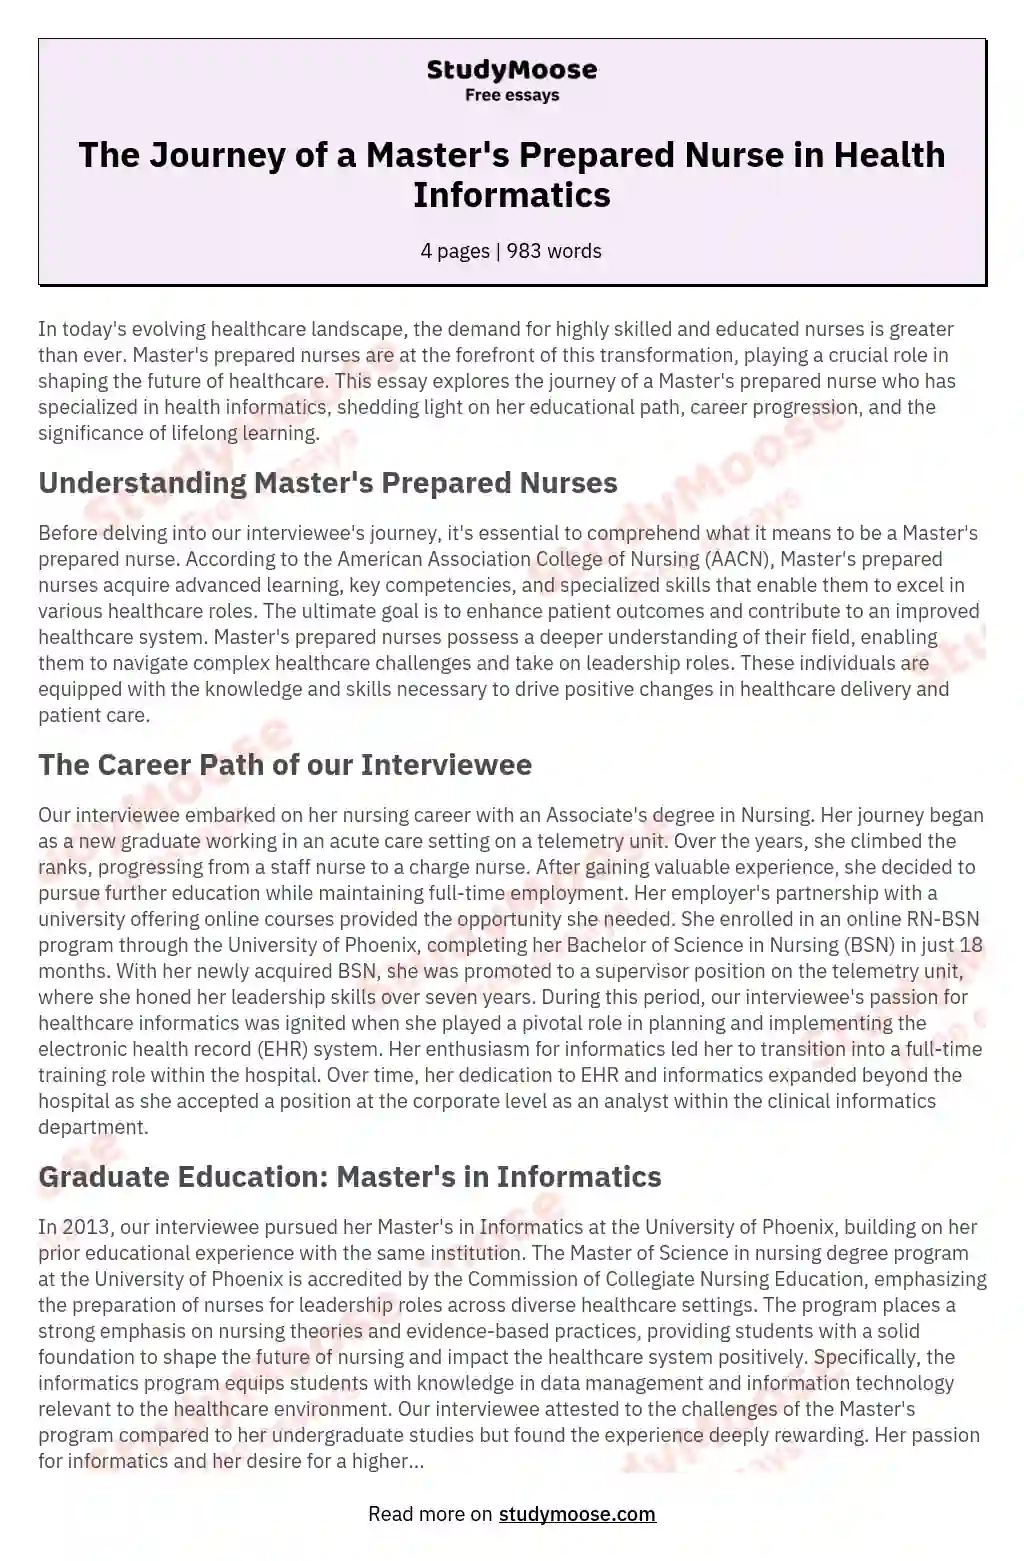 The Journey of a Master's Prepared Nurse in Health Informatics essay